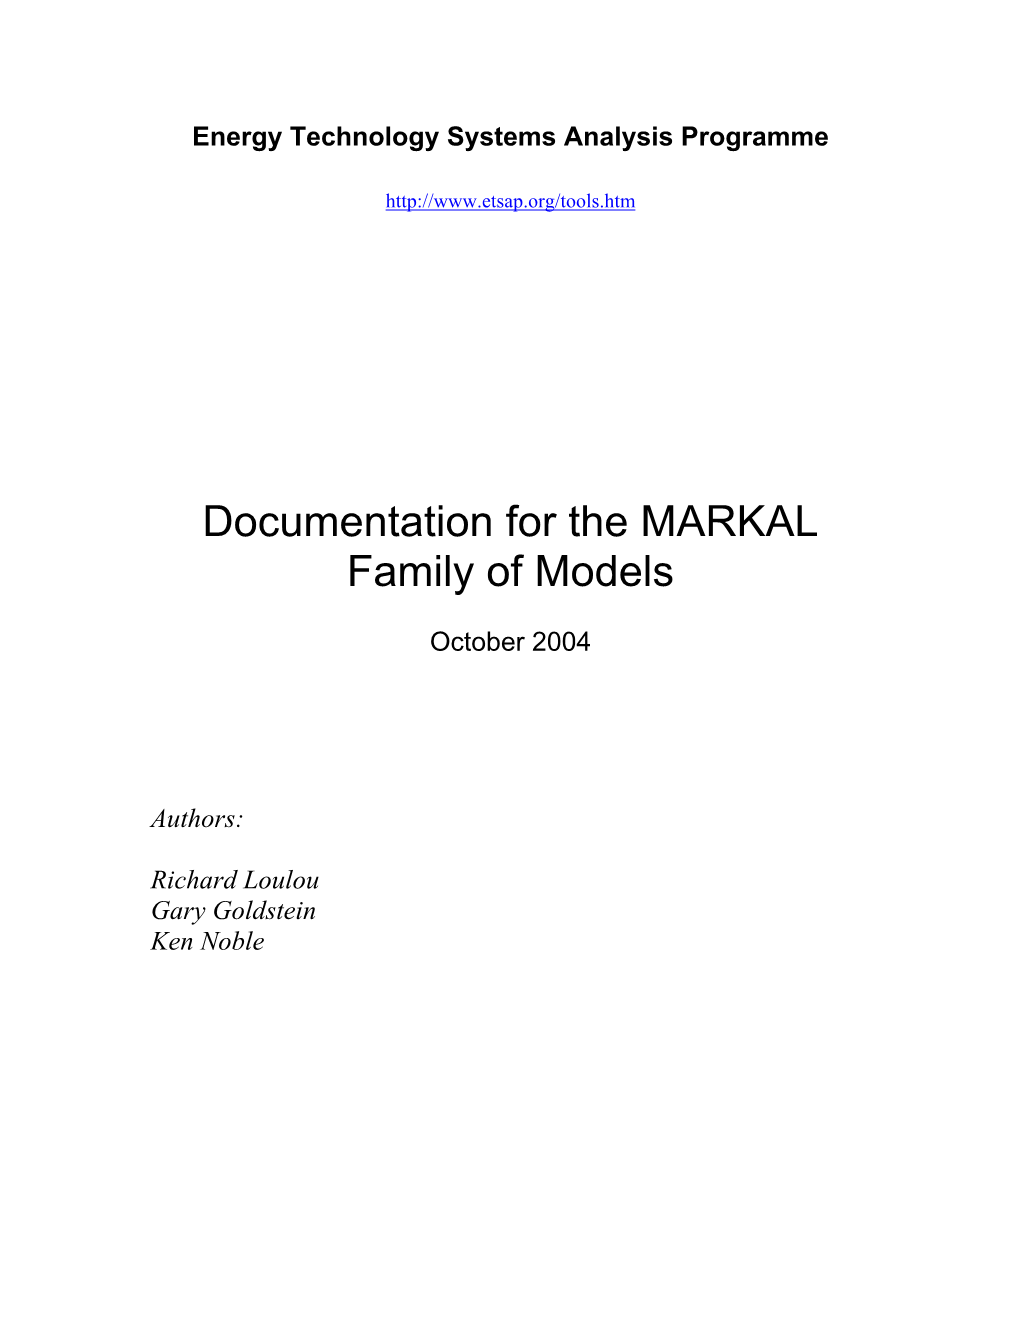 Documentation for the MARKAL Family of Models